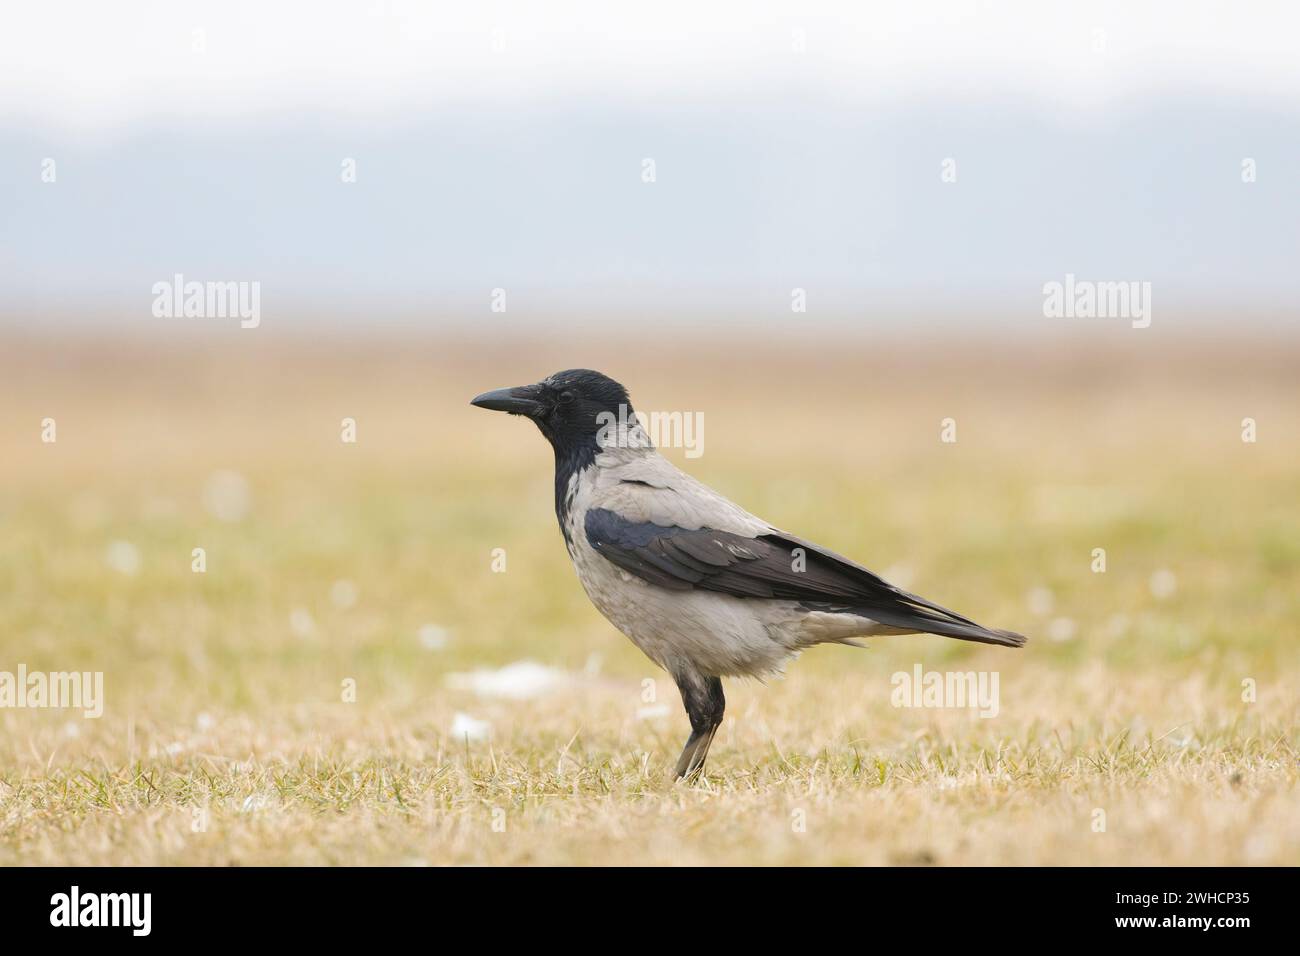 Hooded crow Corvus cornix, adult standing on grassland, Hortobagy, Hungary, February Stock Photo